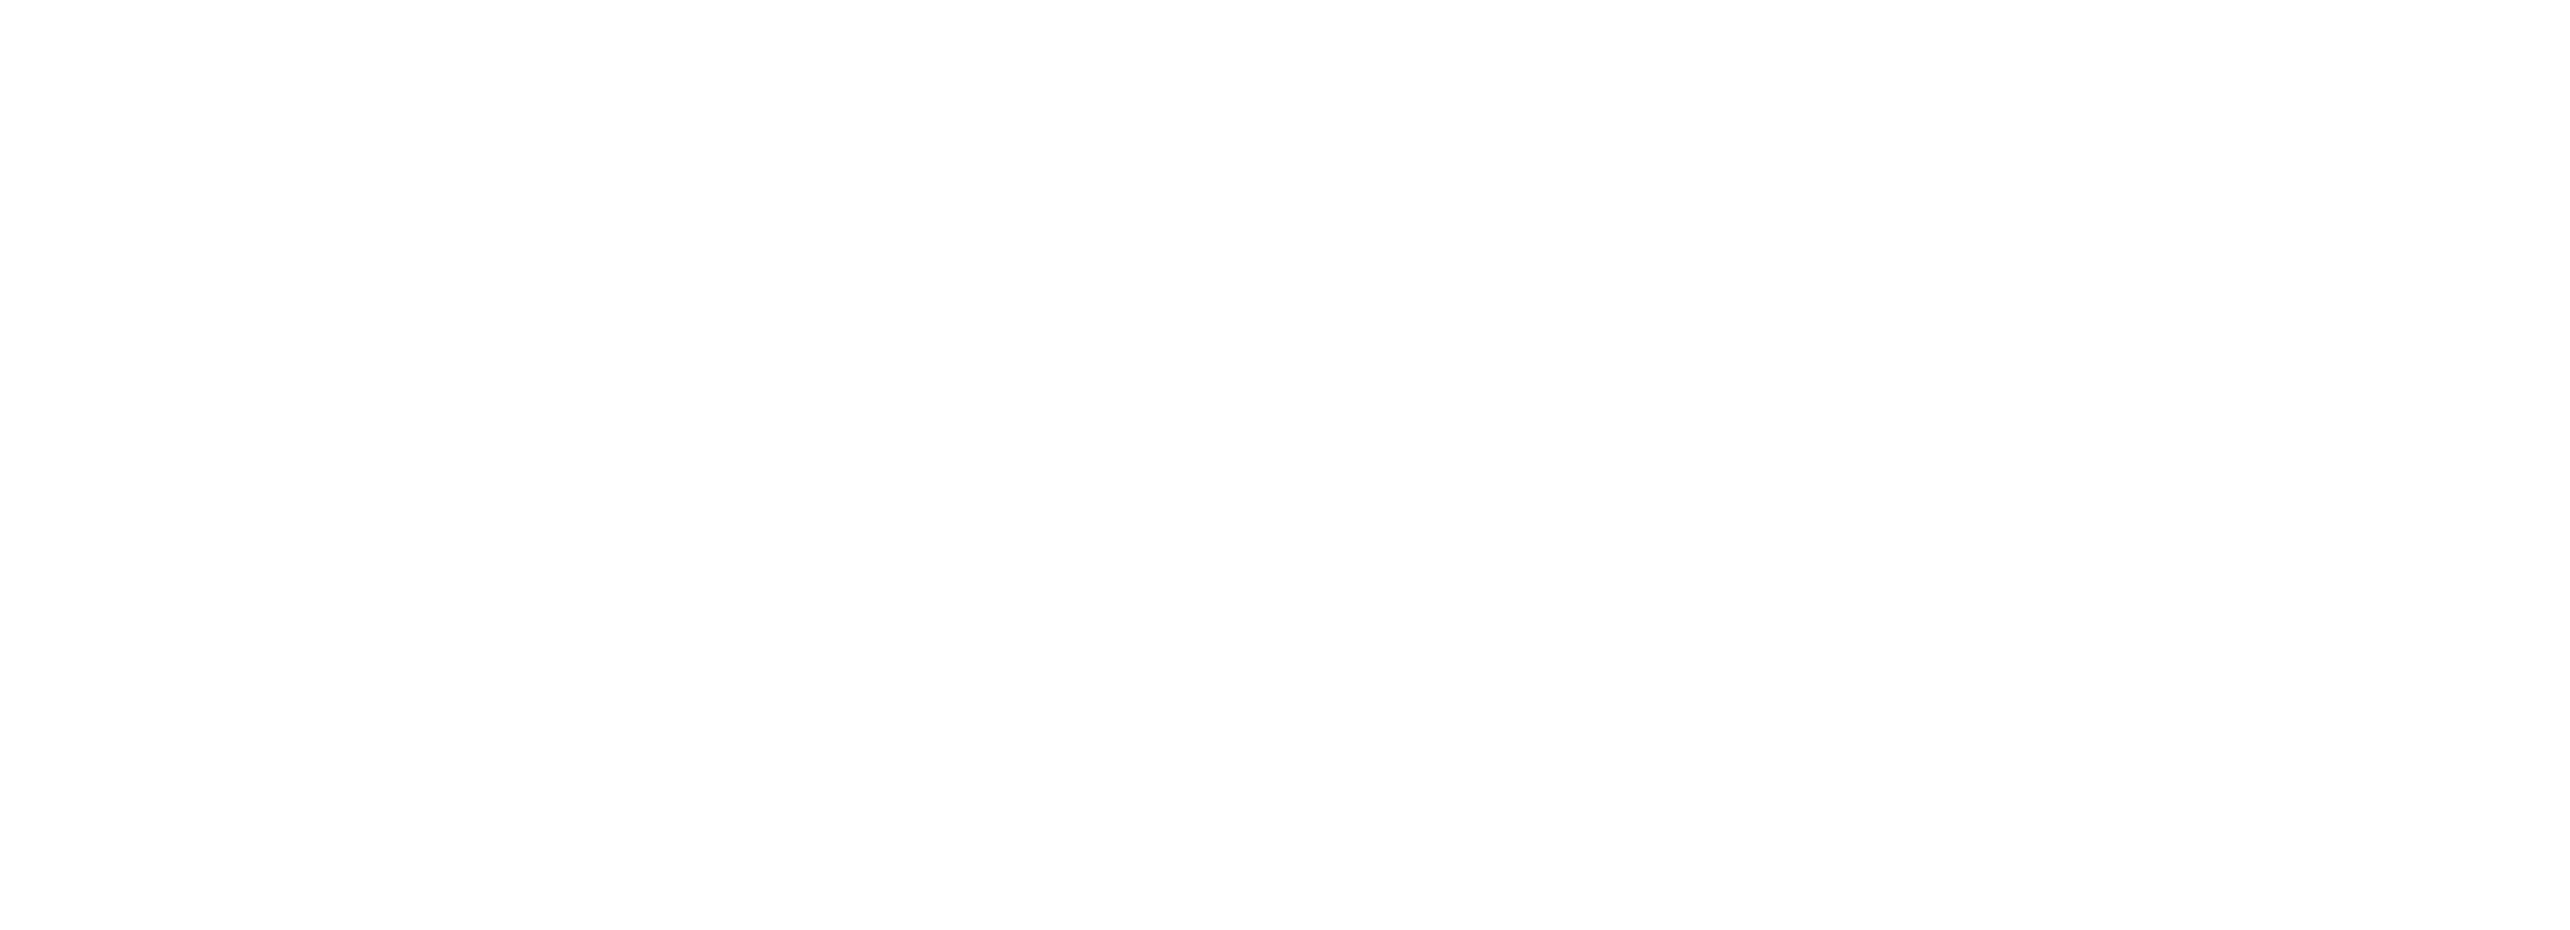 Haven, Dubailand